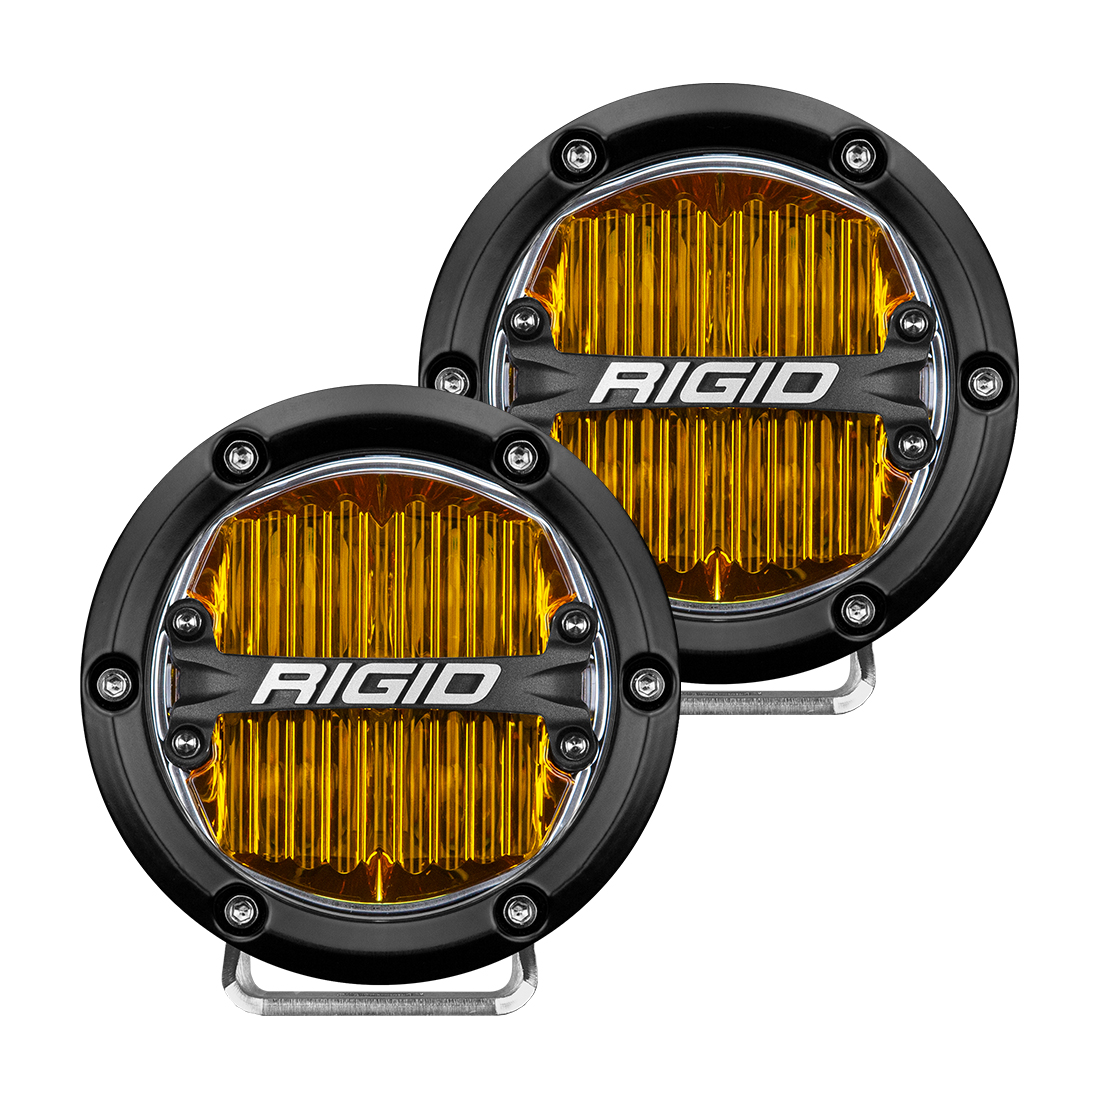 RIGID 360-Series 4 Inch Round SAE J583 Compliant Street Legal LED Fog Light, Selective Yellow, Pair